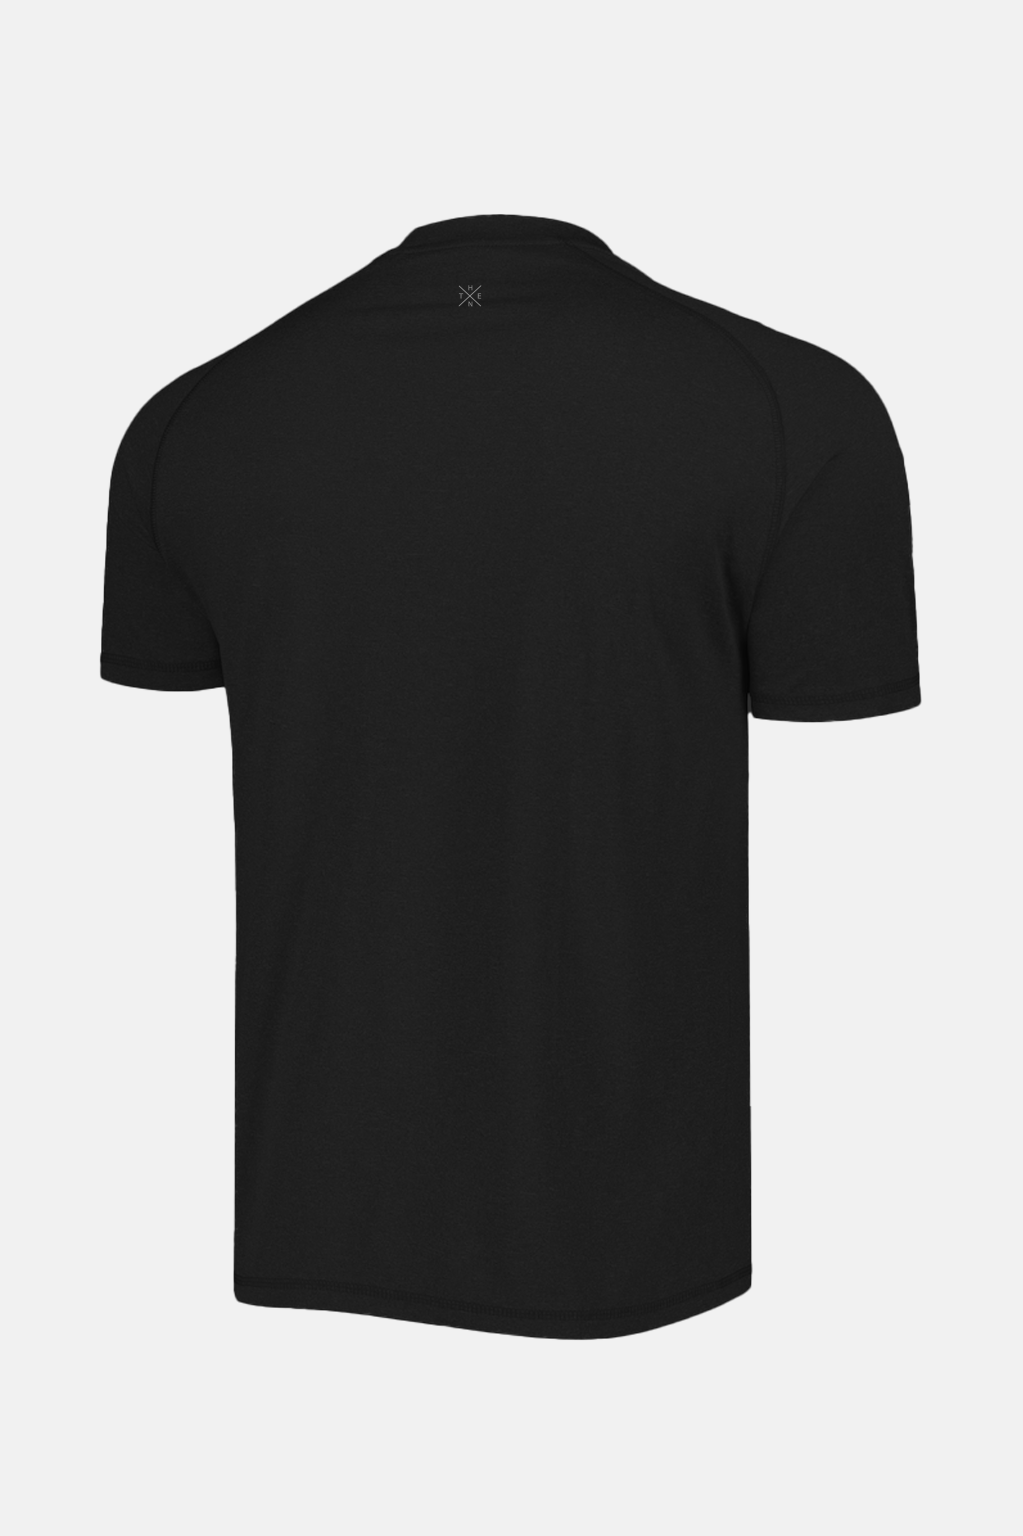 Thenx Premium Athletic Black T-Shirt - THENX